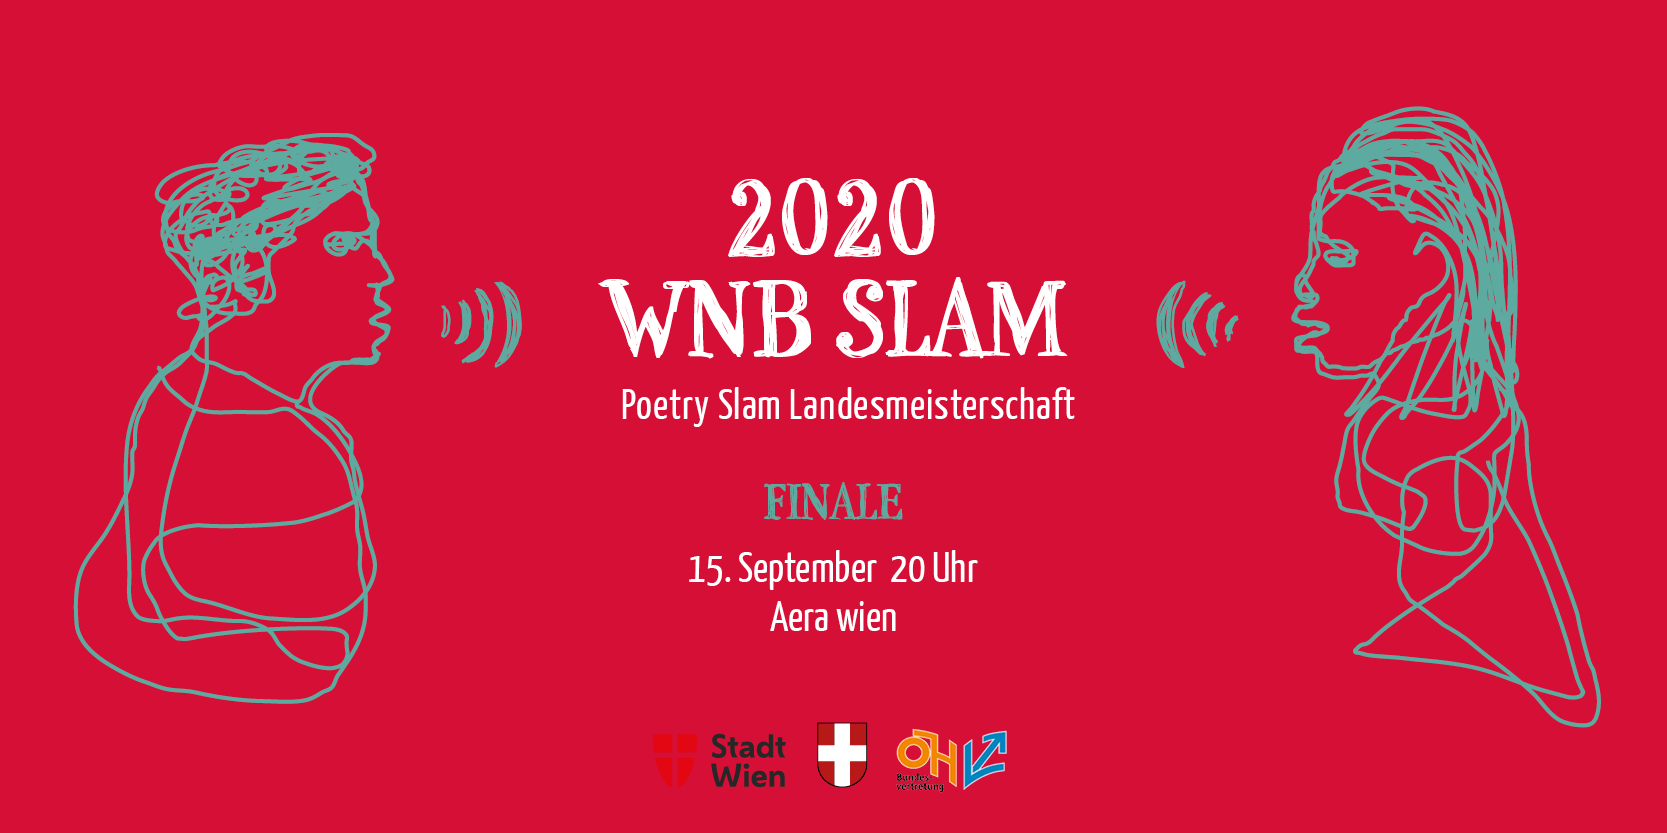 WNB SLAM 2020 Finale am 15. September 2020 @ Aera.